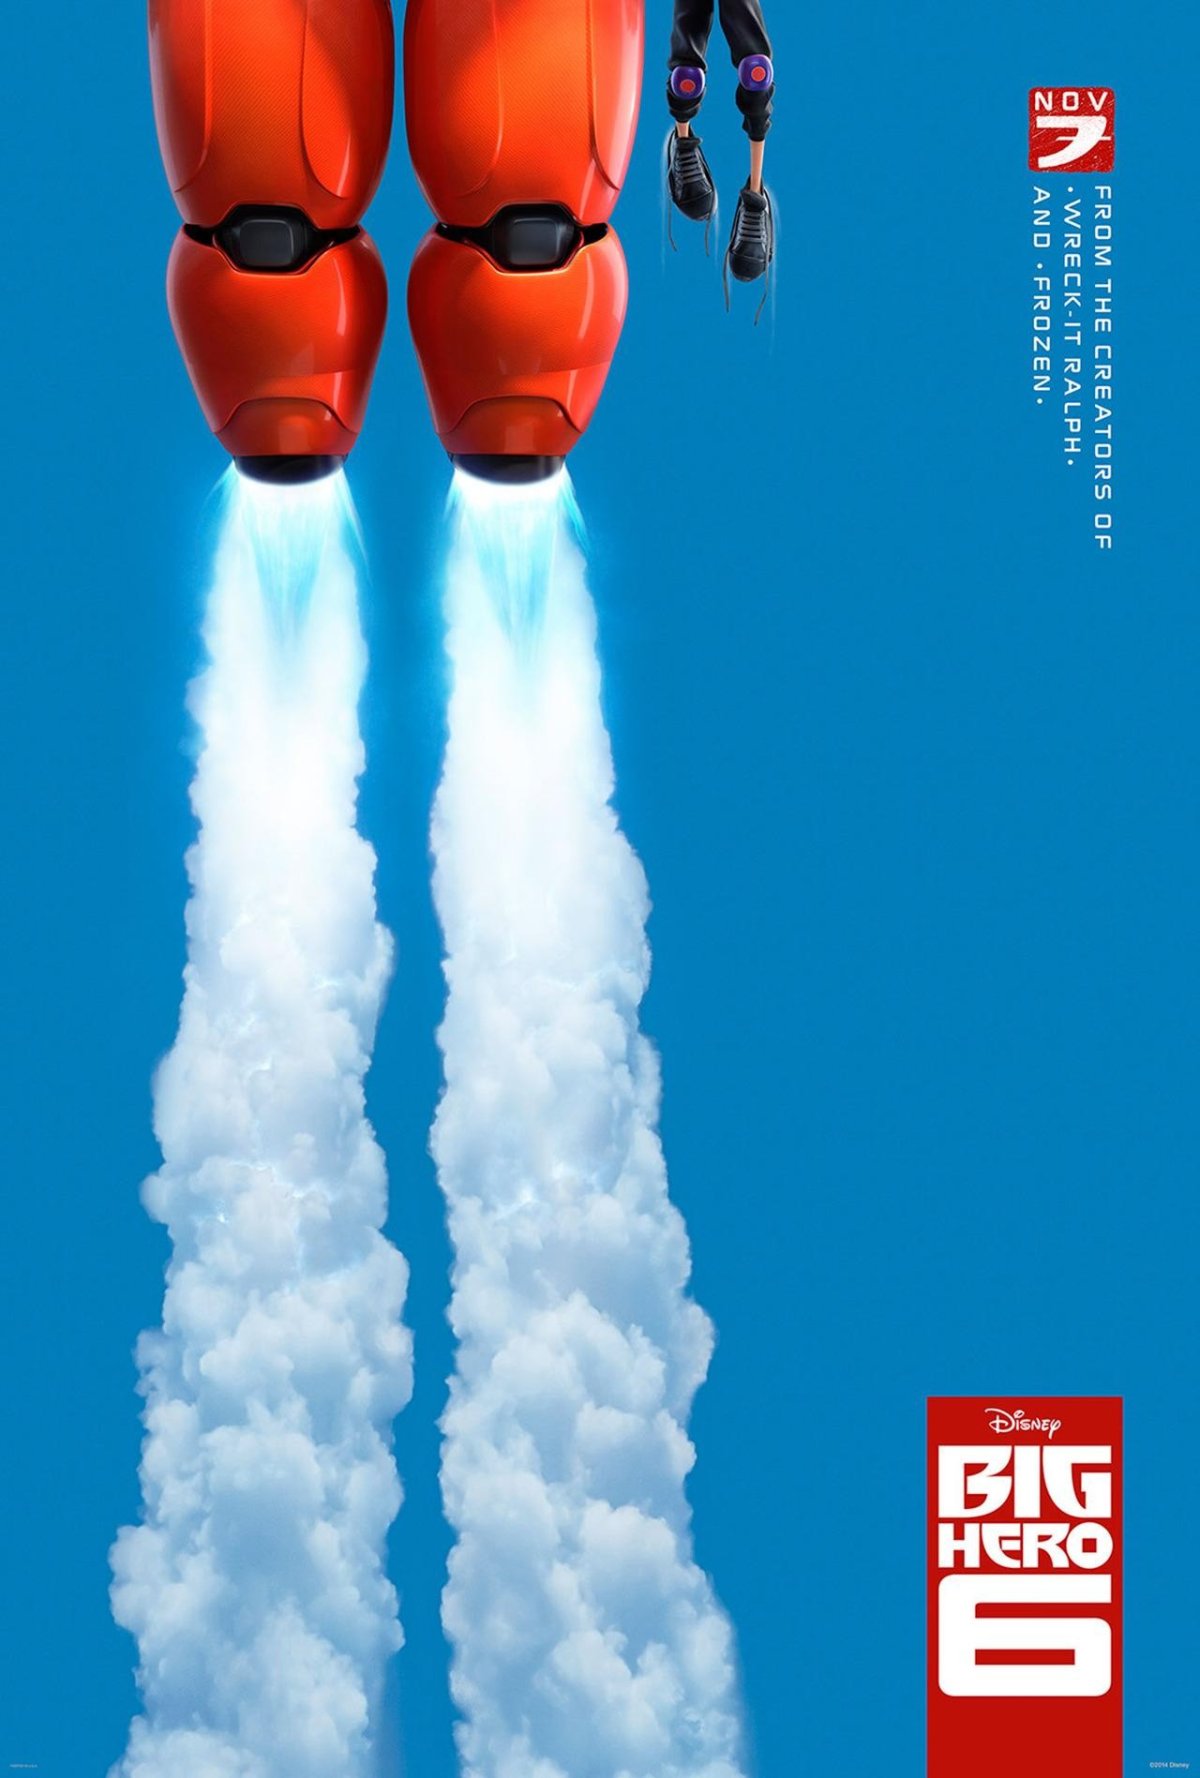 Big Hero 6 (film) - Wikipedia